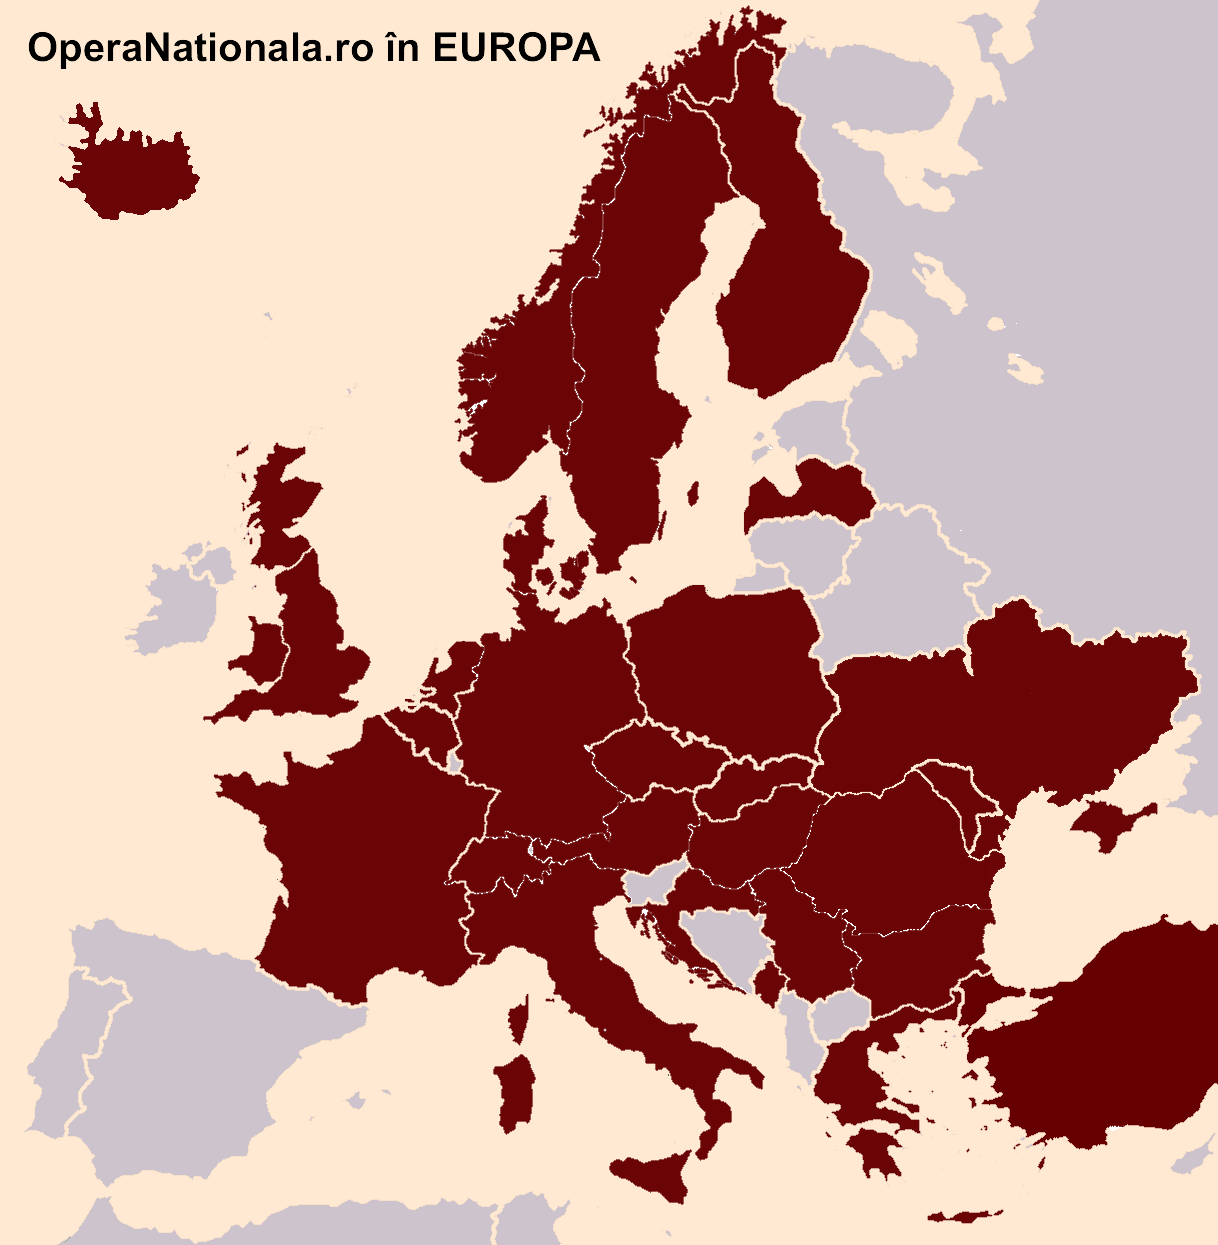 OperaNationala.ro Europa